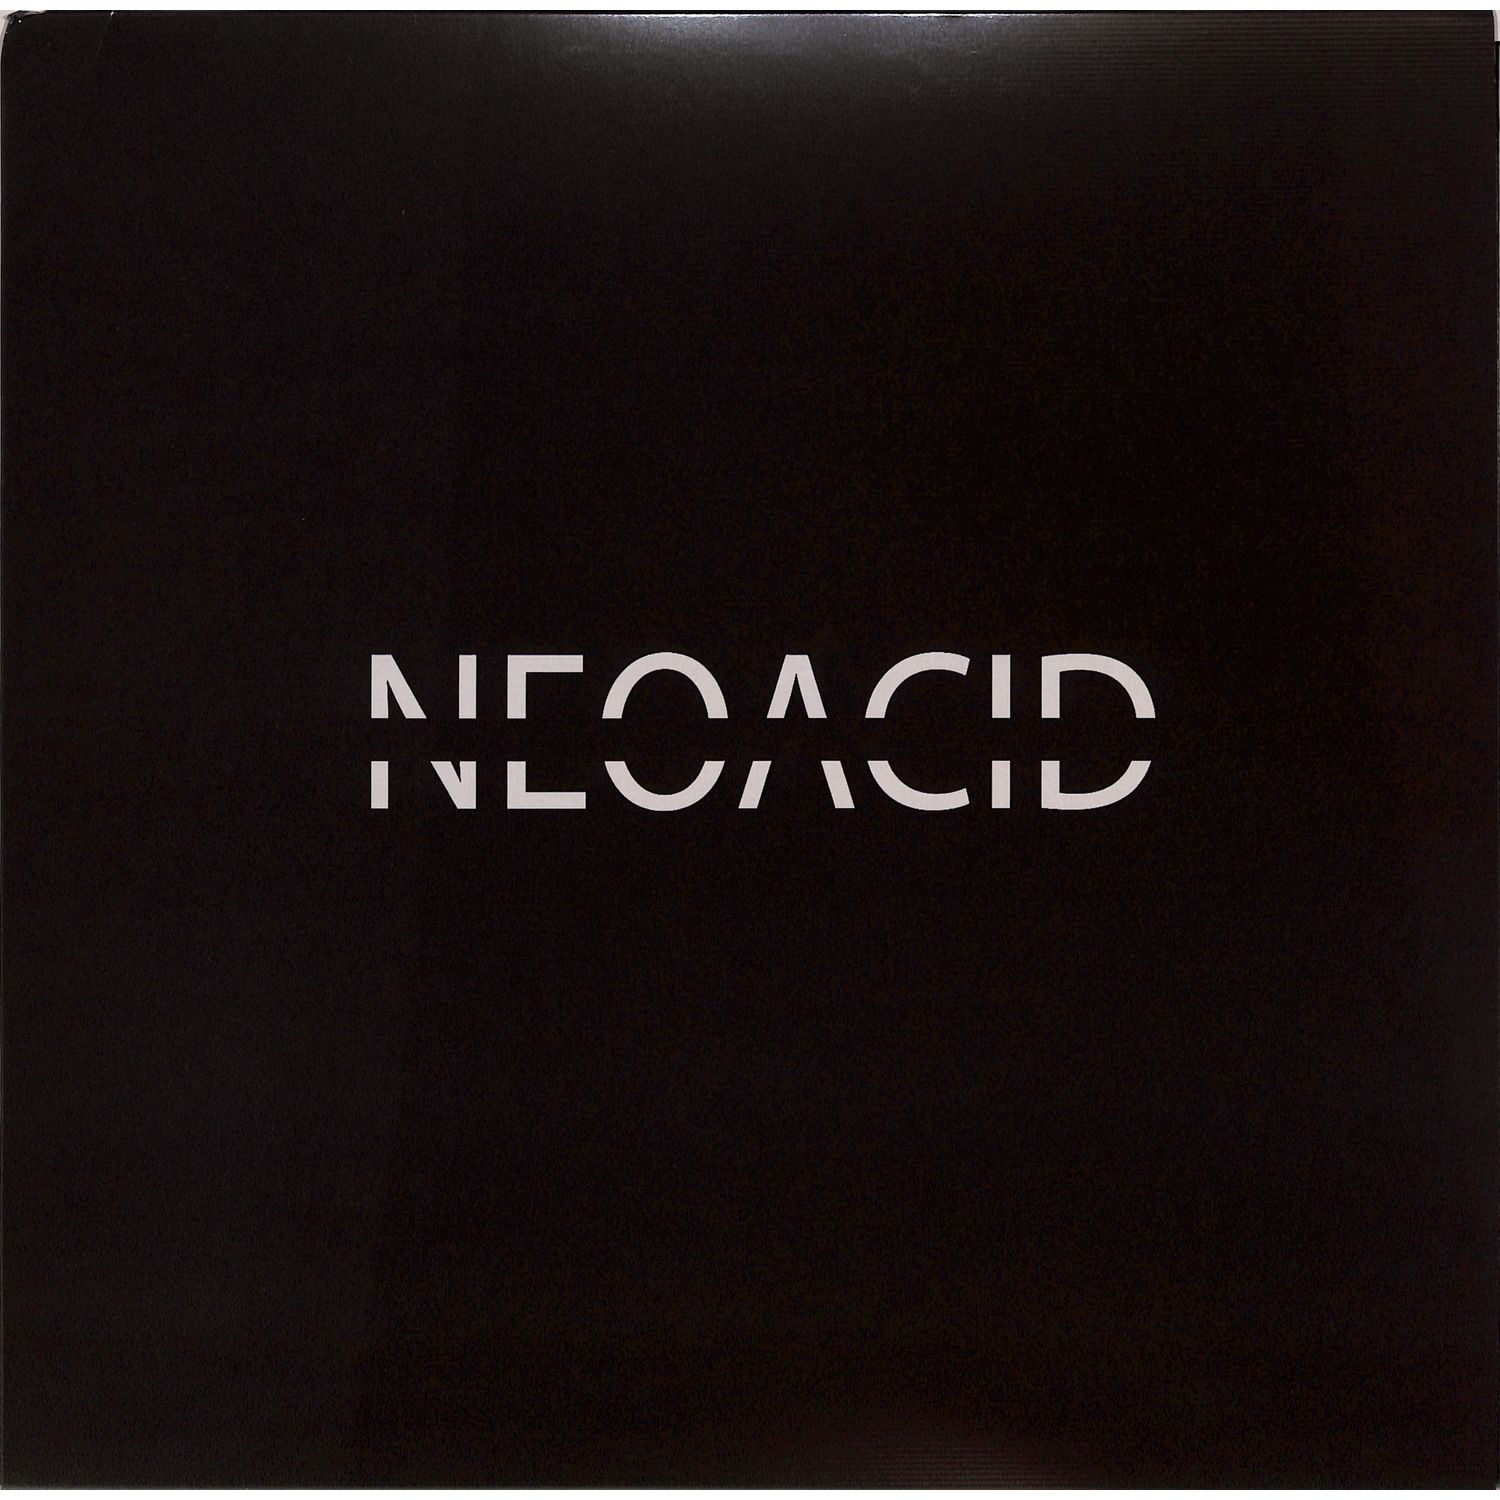 Jacidorex - NEOACID 03 